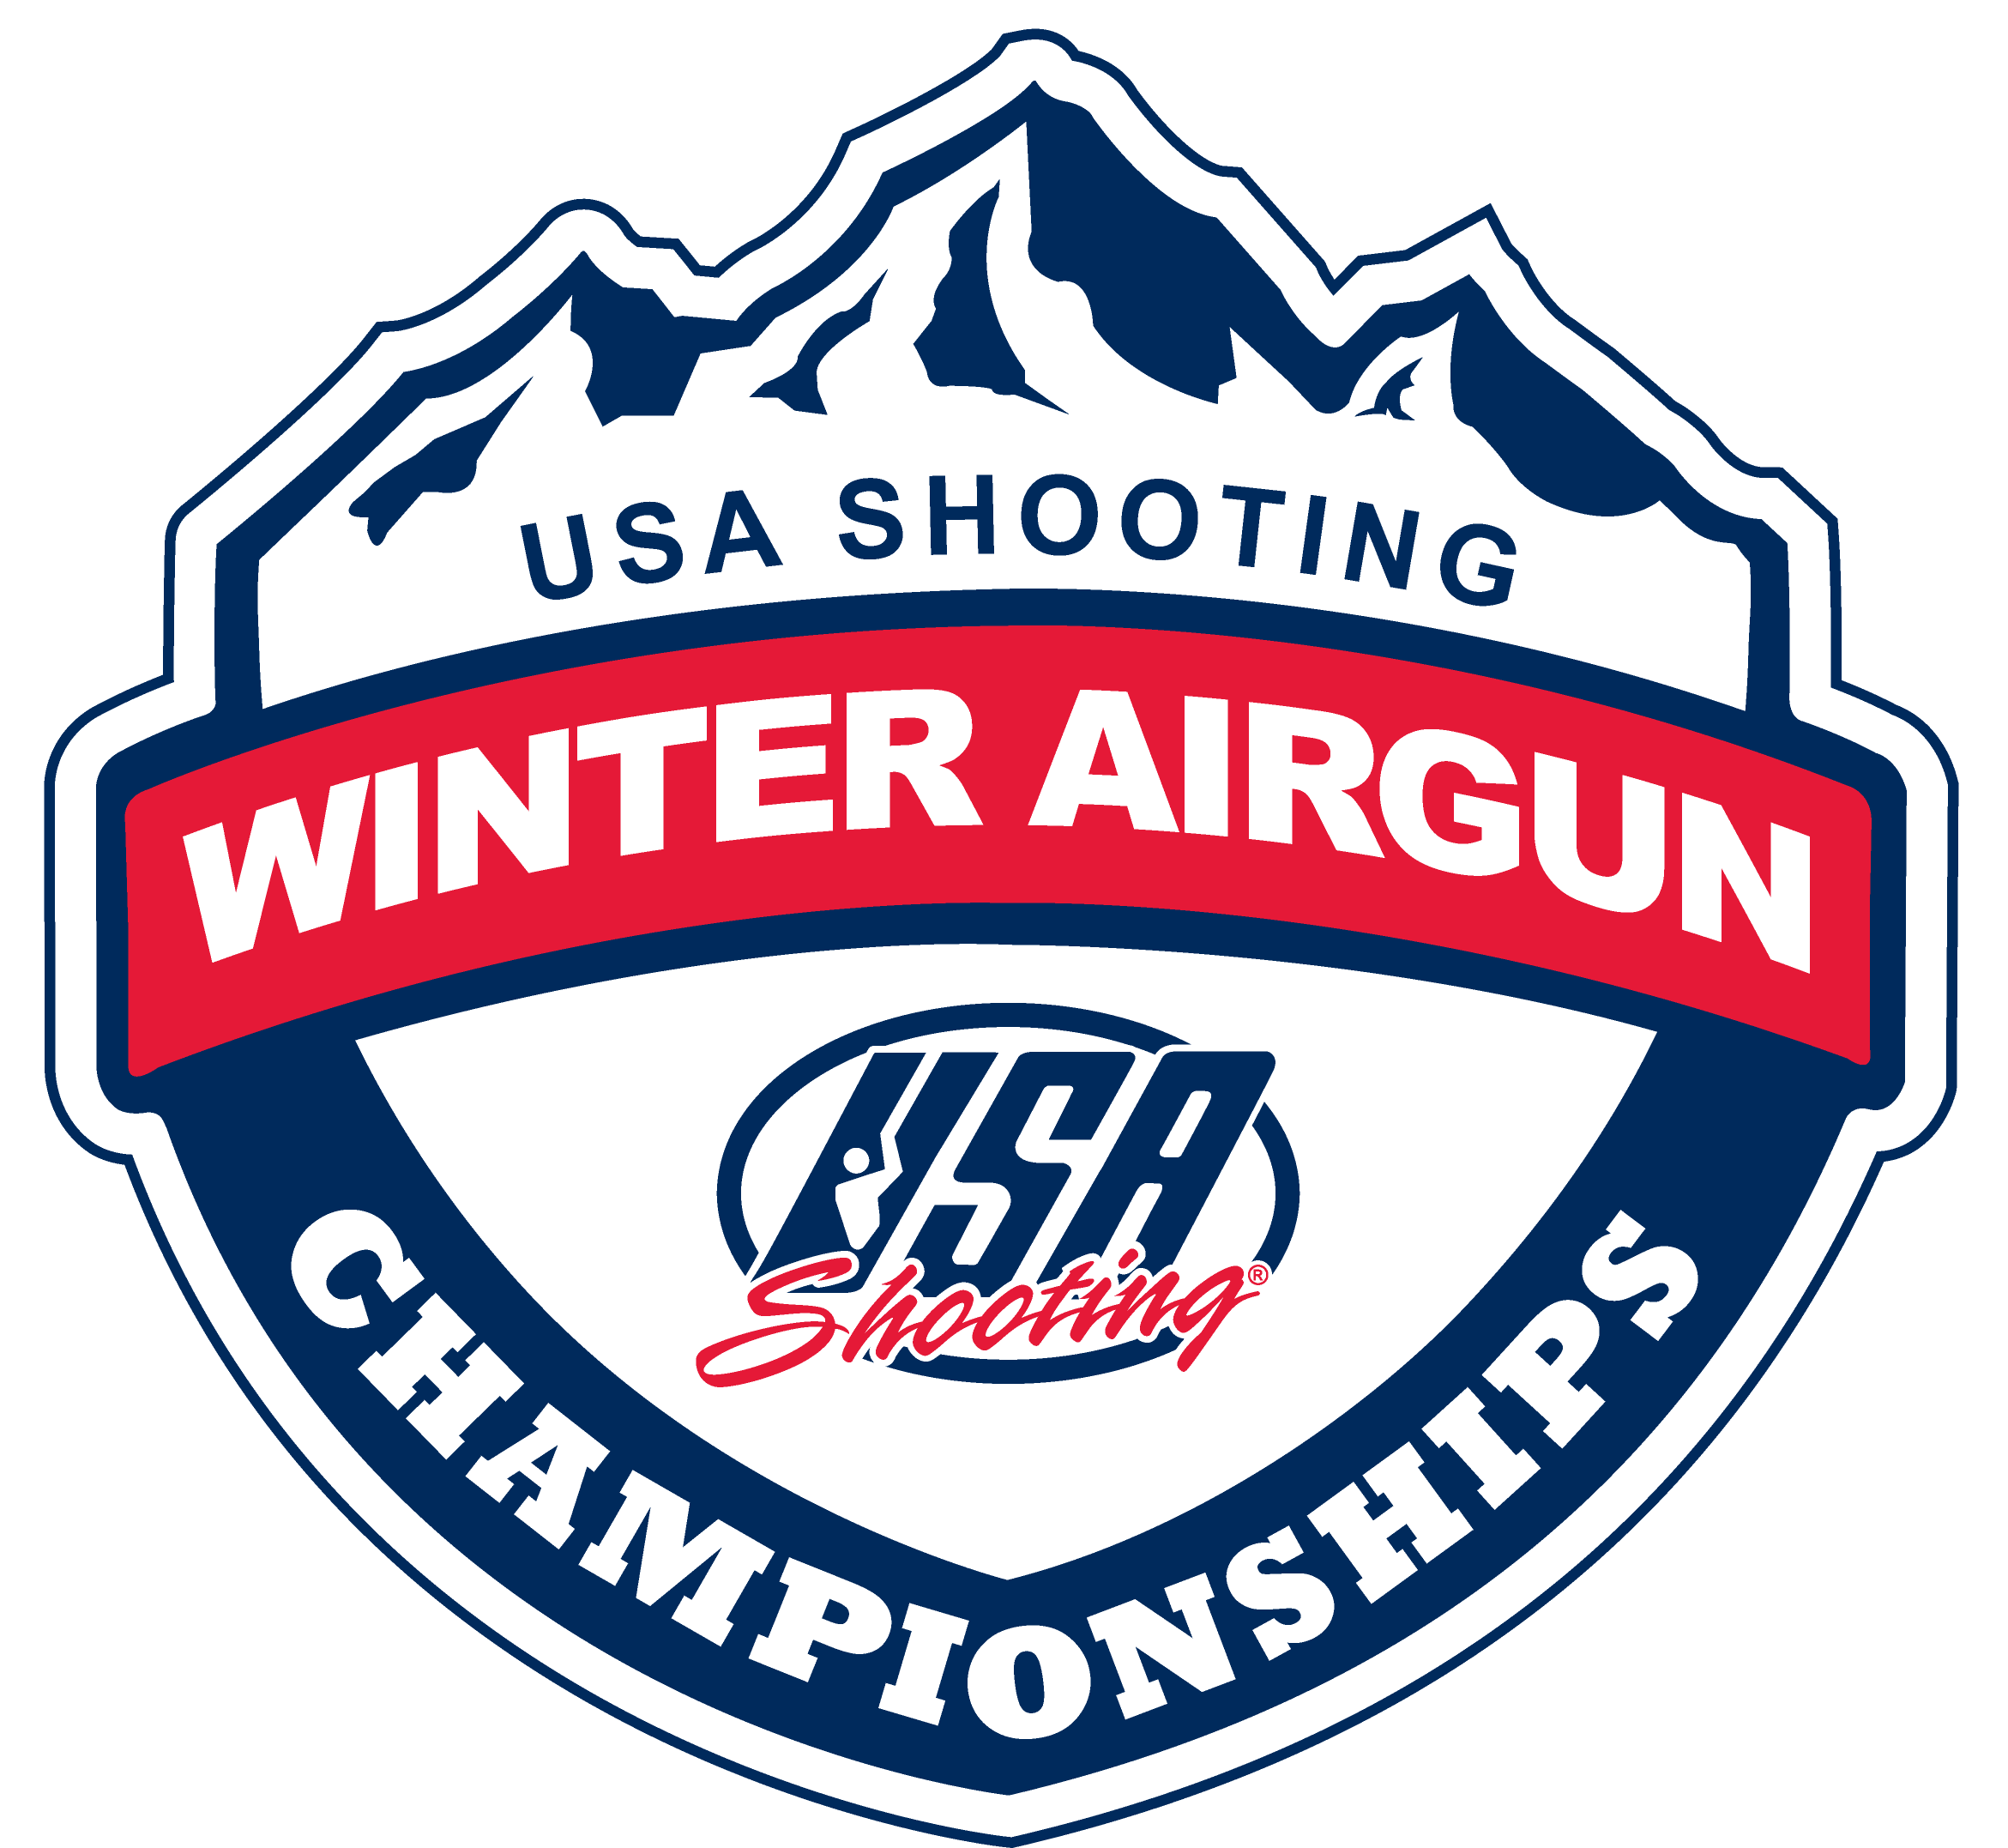 Air Gun Logo - Weisz & Lagan Heat Up 2018 Winter Airgun Championships with Top